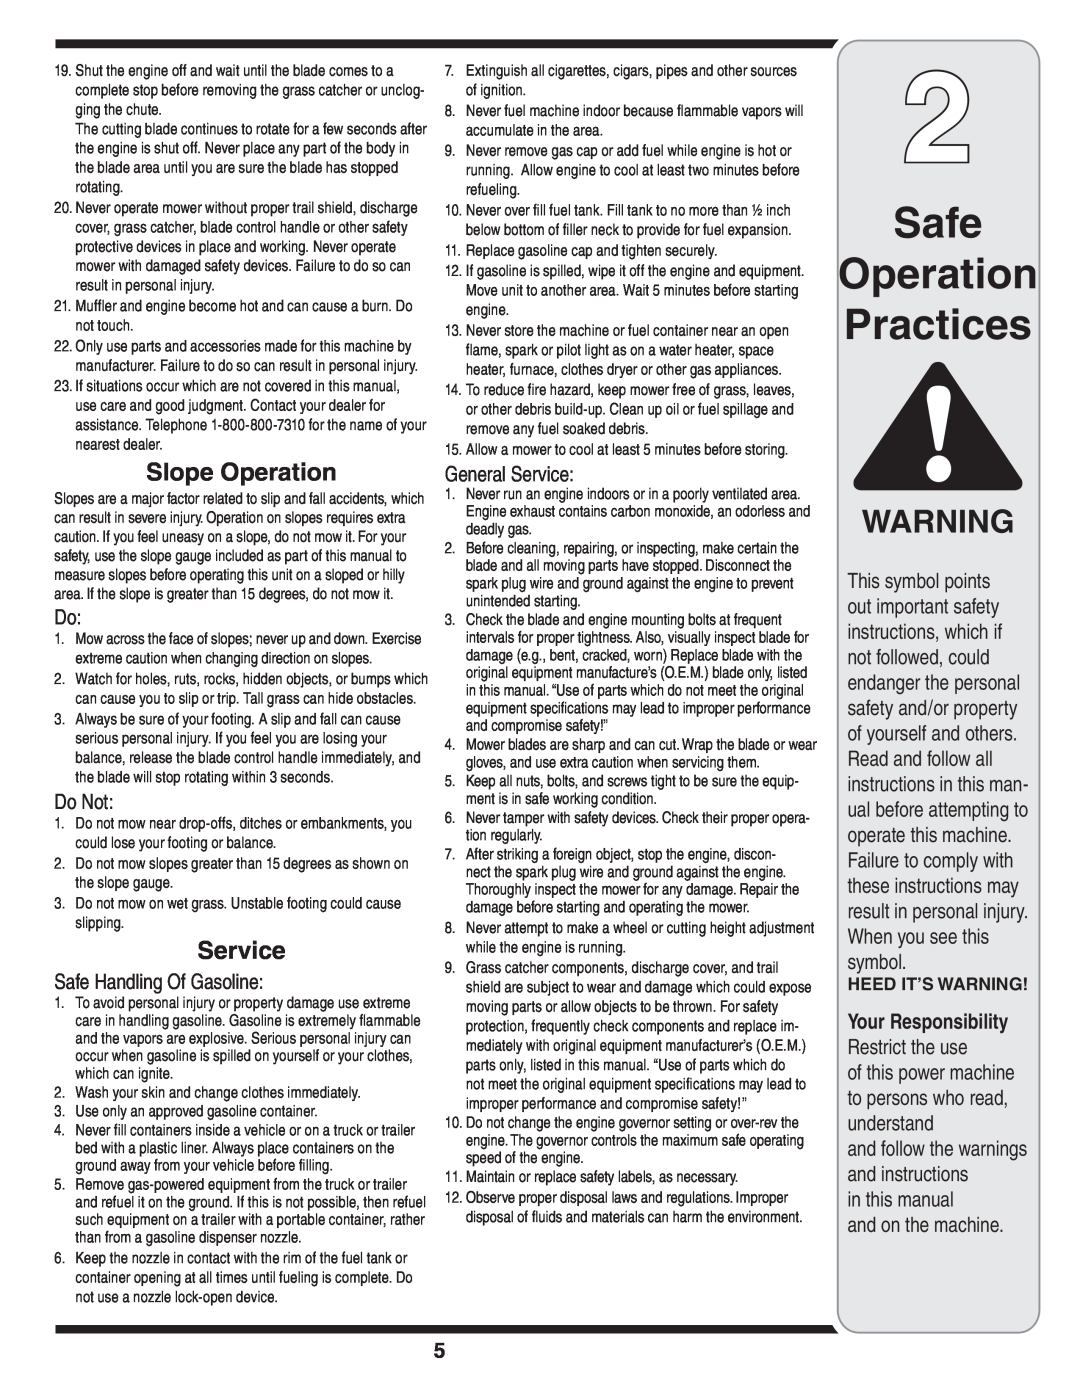 White Outdoor 500 Safe Operation Practices, Slope Operation, Do Not, Safe Handling Of Gasoline, General Service 